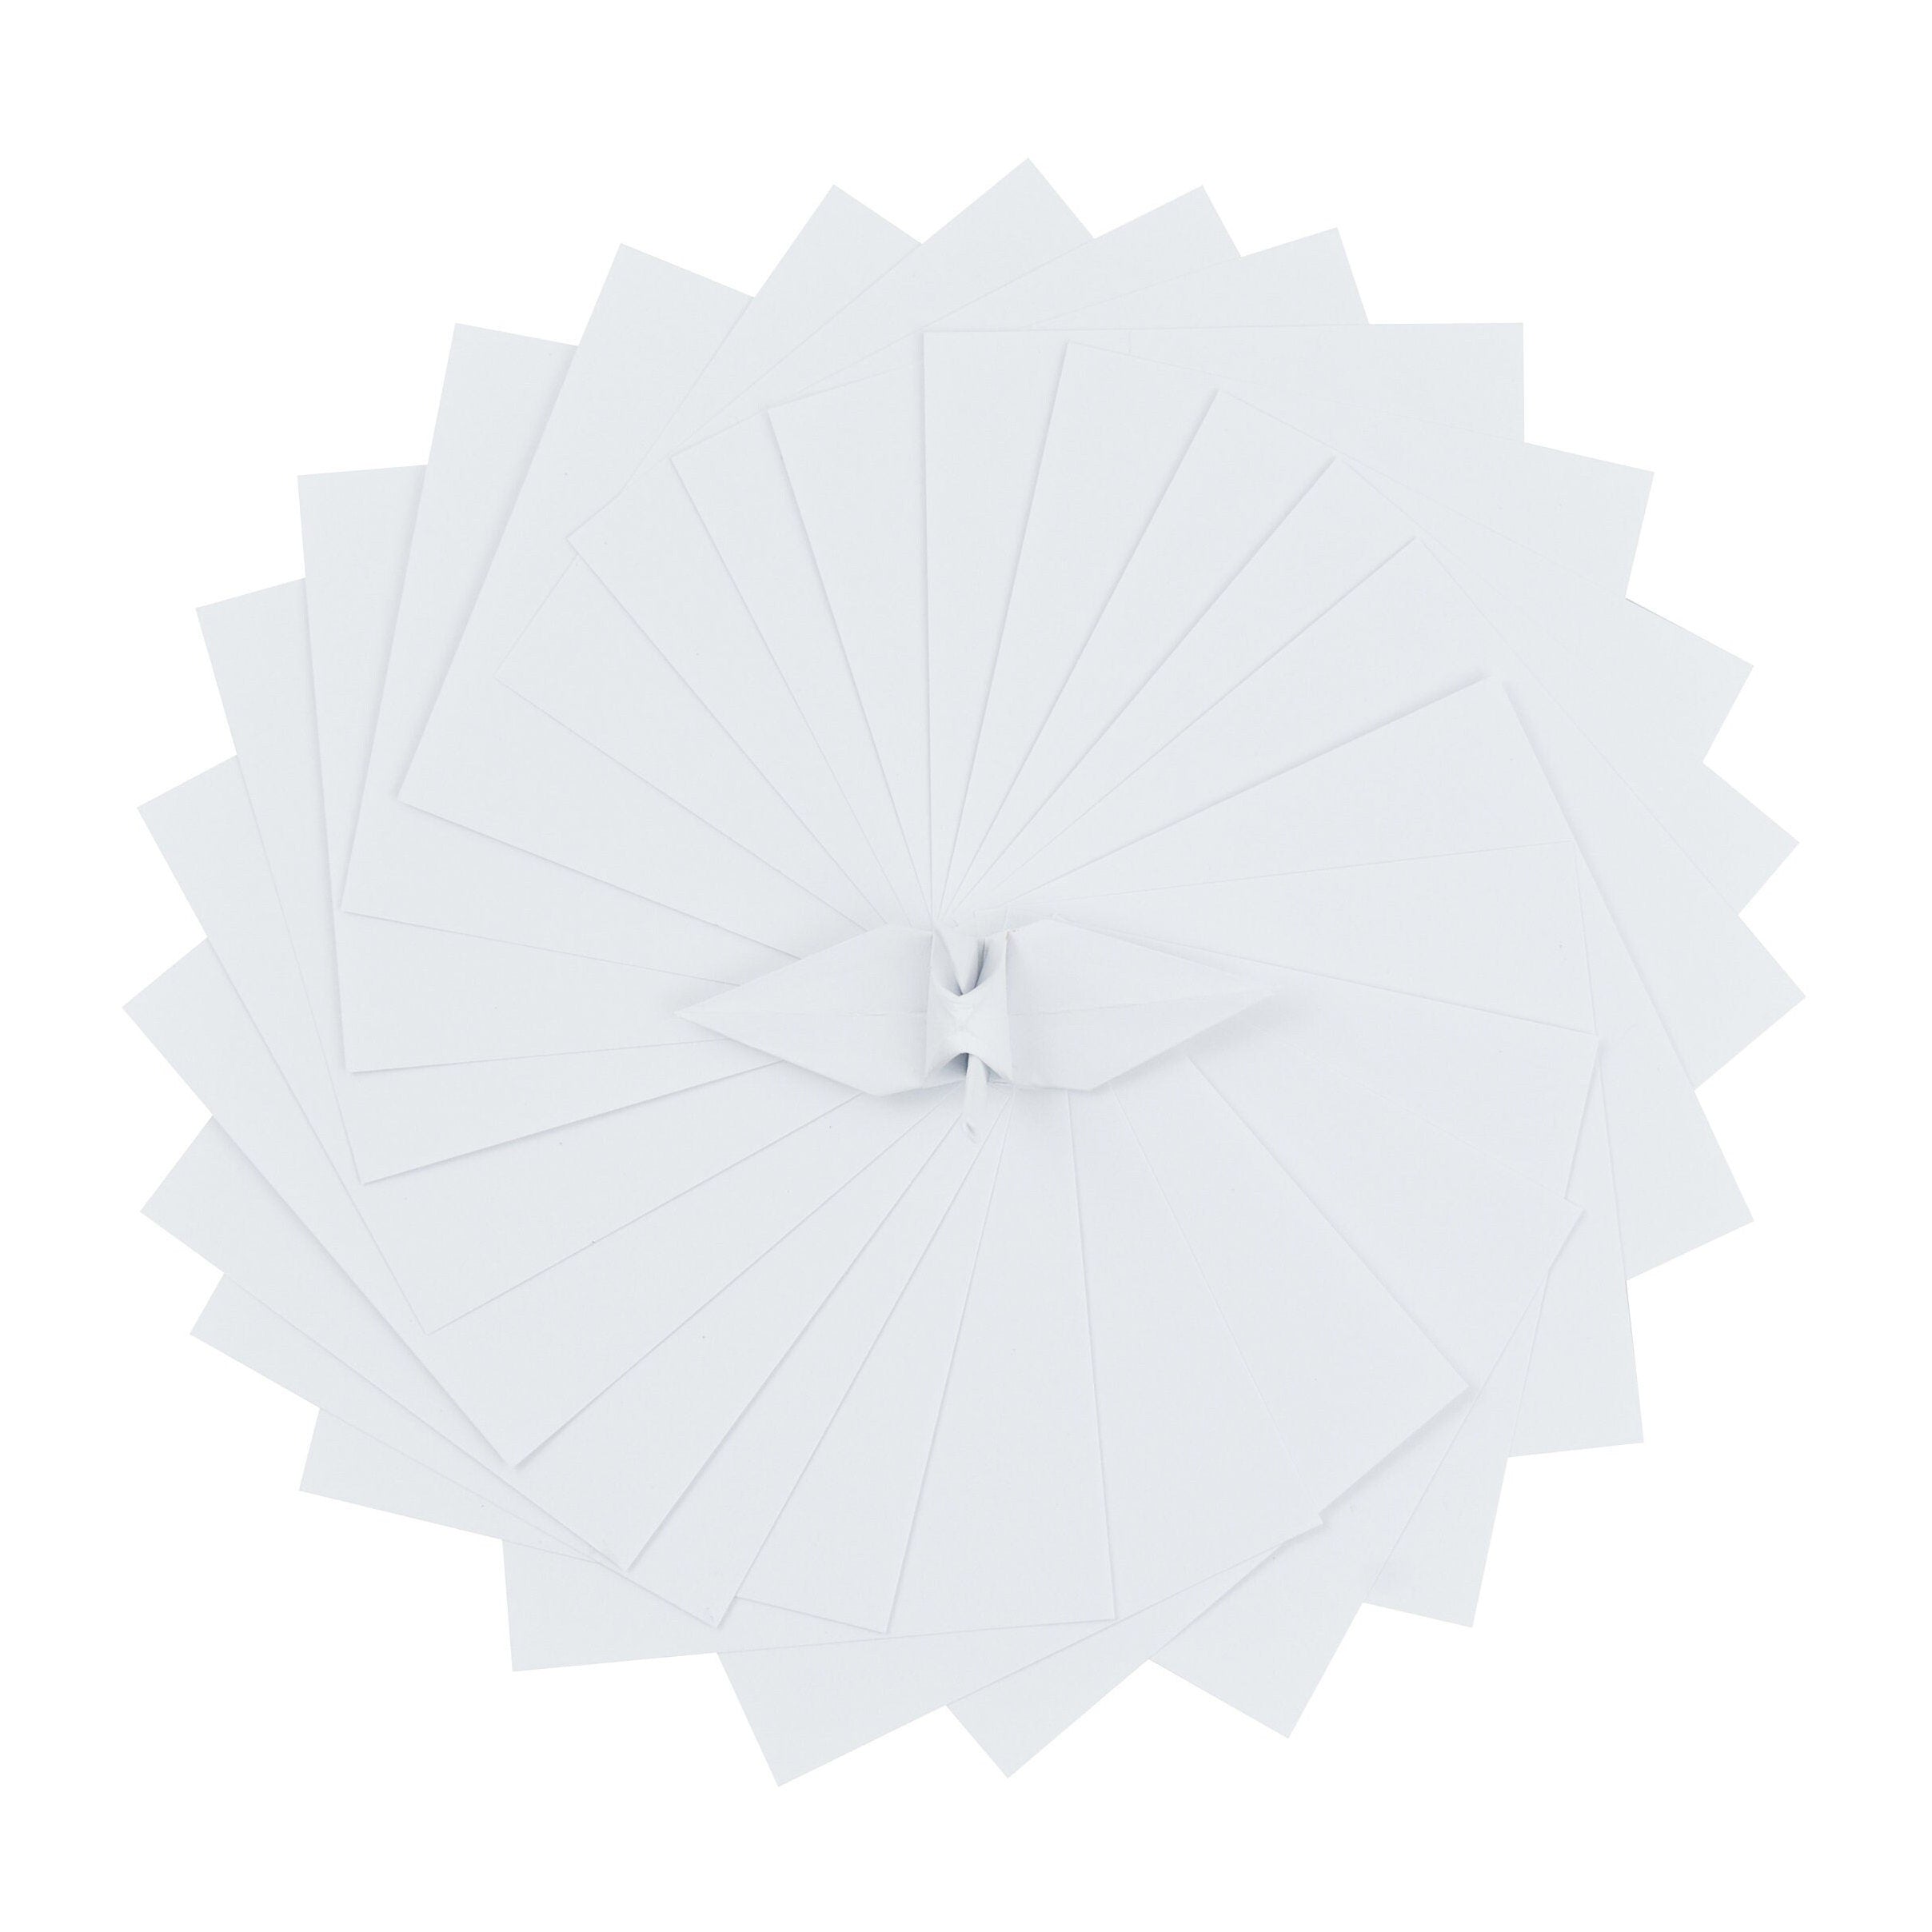 100 fogli di carta origami bianchi - 6x6 pollici - Confezione di carta quadrata per piegare, gru origami e decorazioni